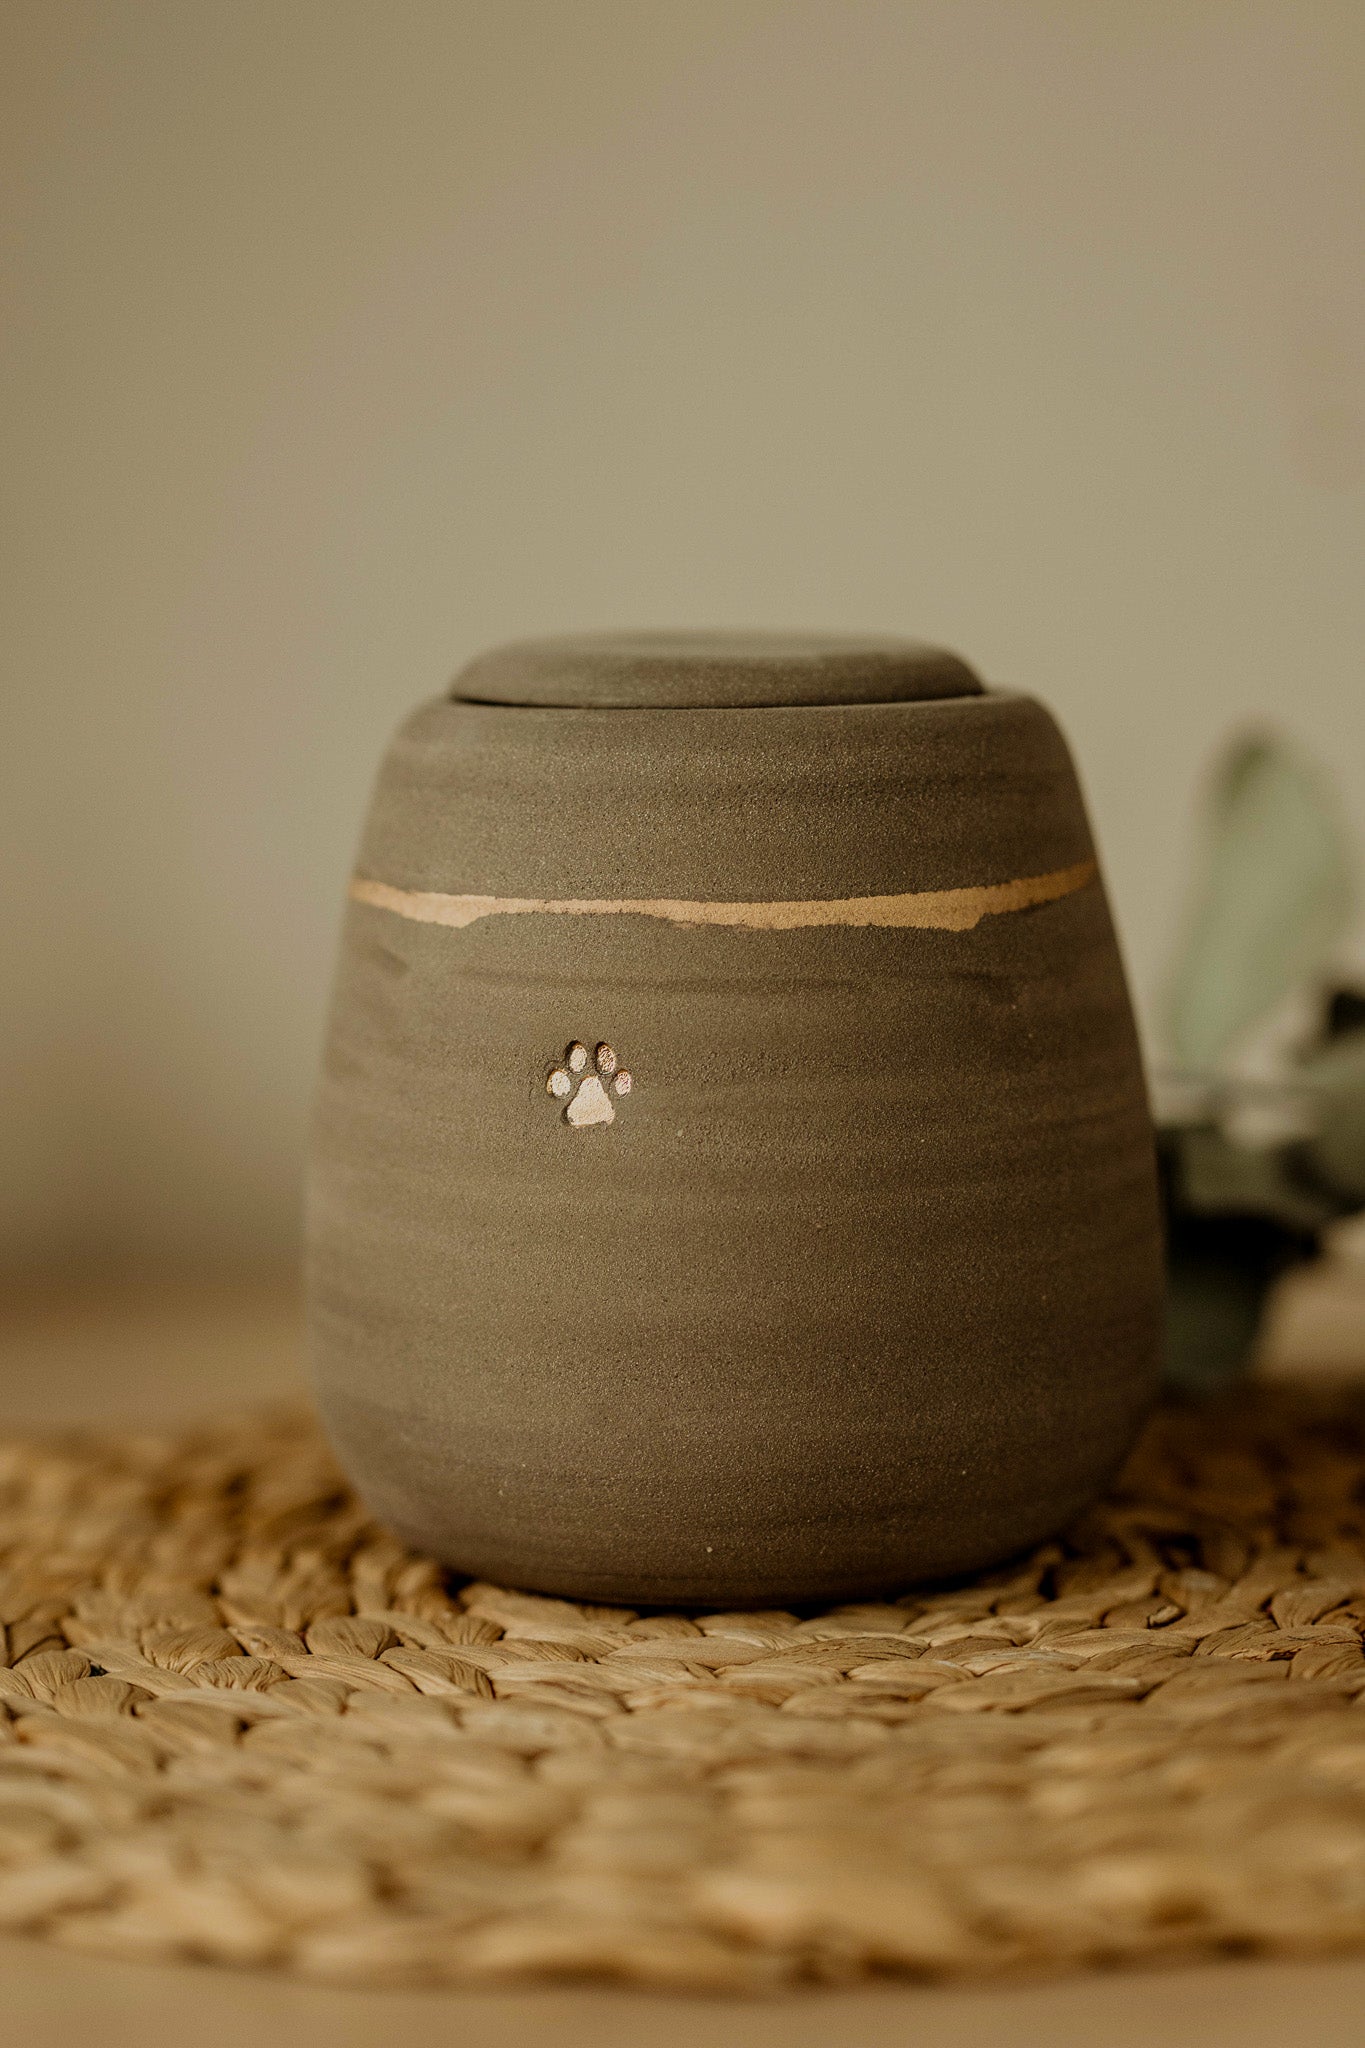 Handmade dog ashes urn